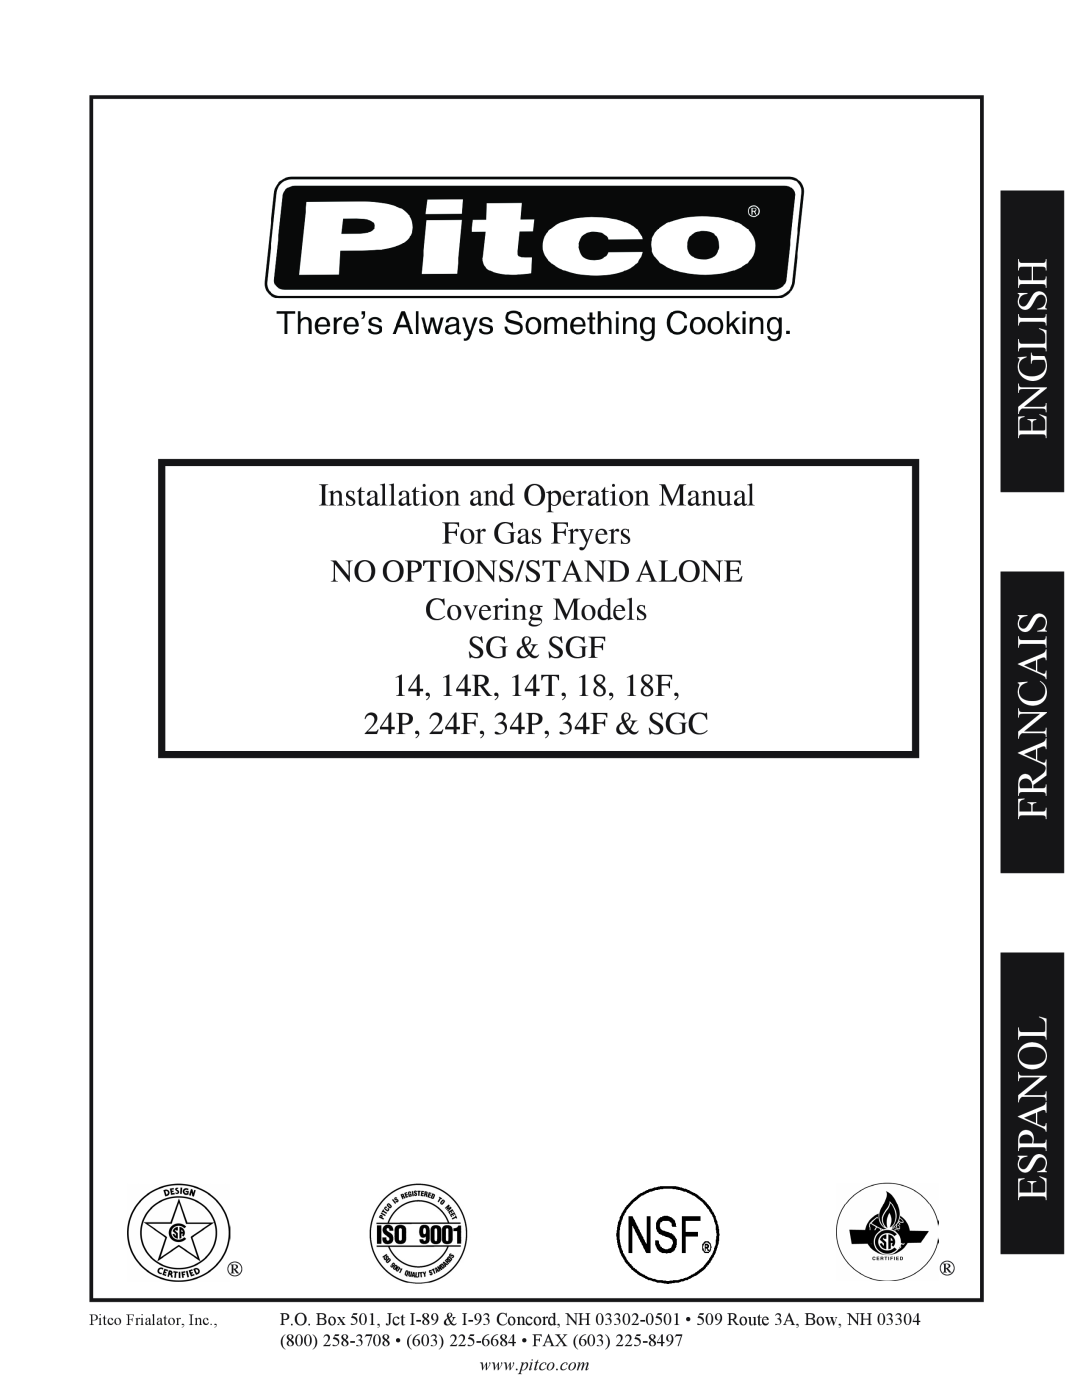 Pitco Frialator 34P, SGC, 24P operation manual English Francais Espanol, NO OPTIONS/STAND ALONE Covering Models SG & SGF 